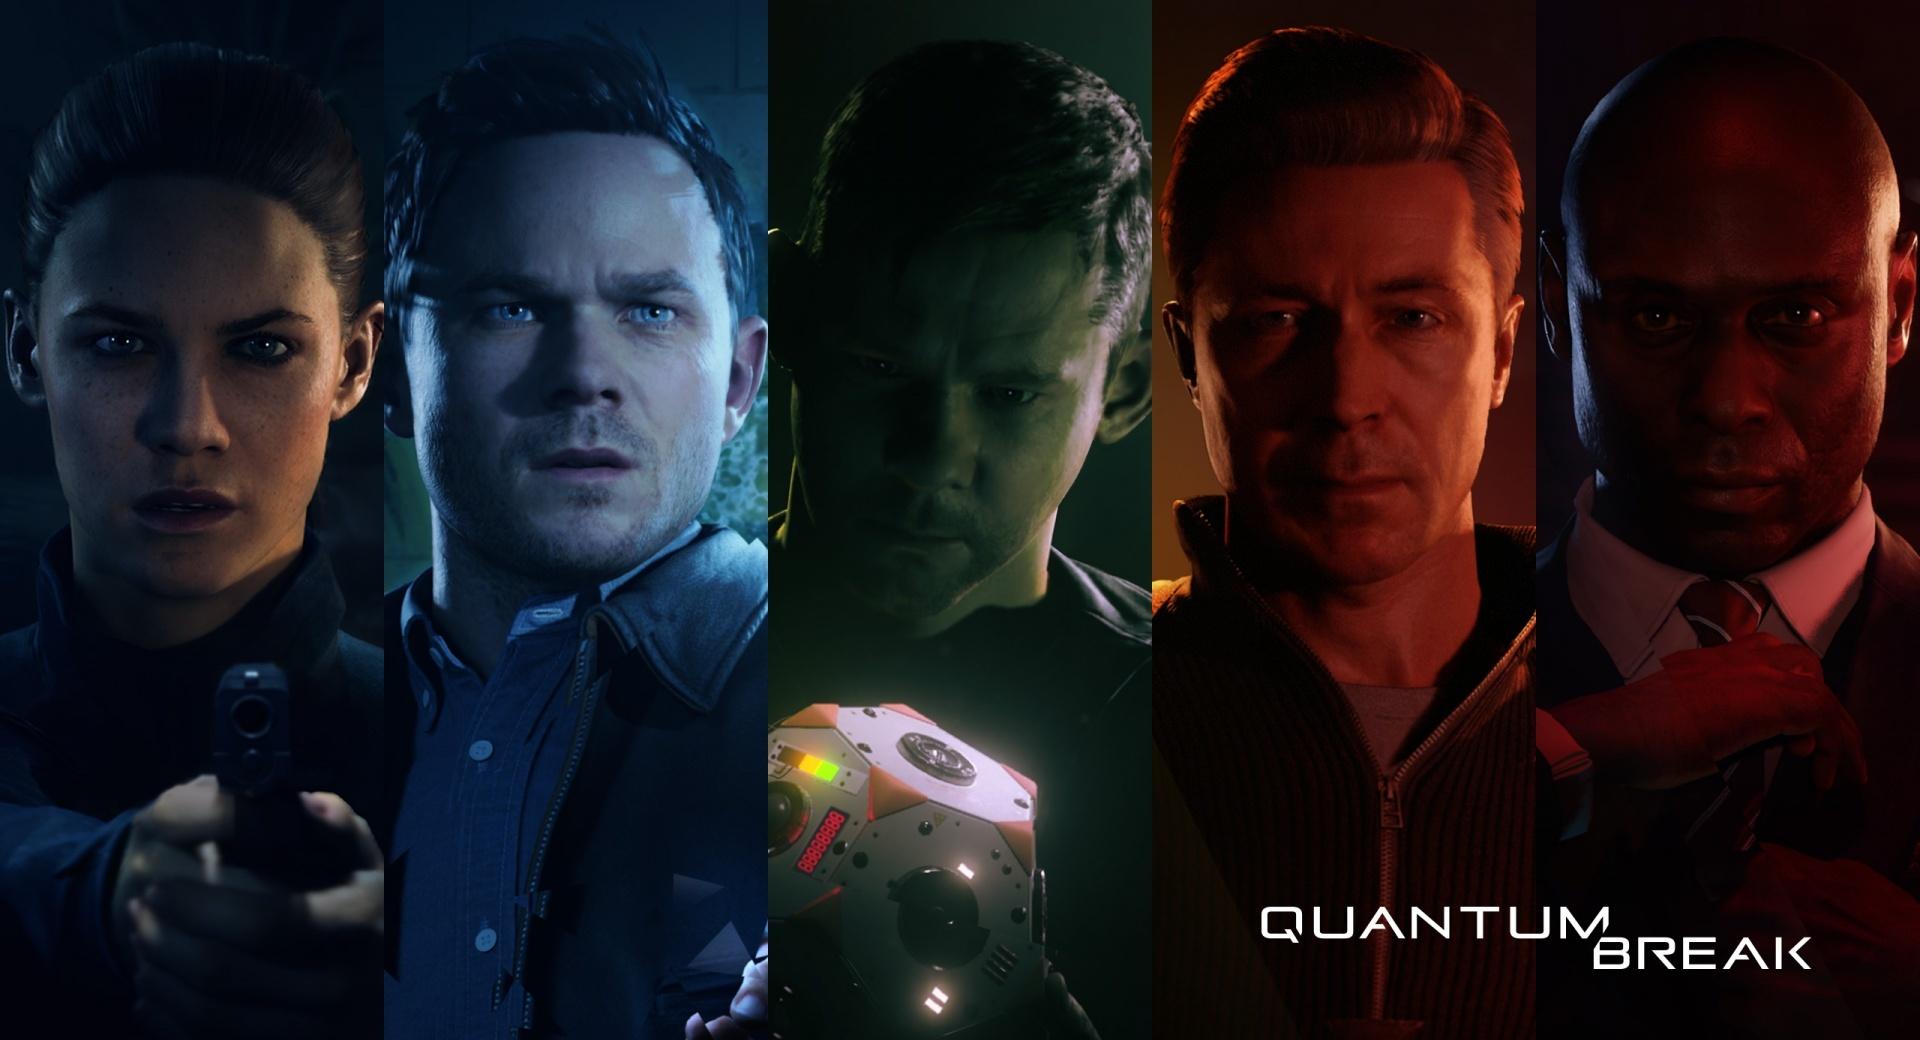 Quantum Break Cast at 1024 x 768 size wallpapers HD quality